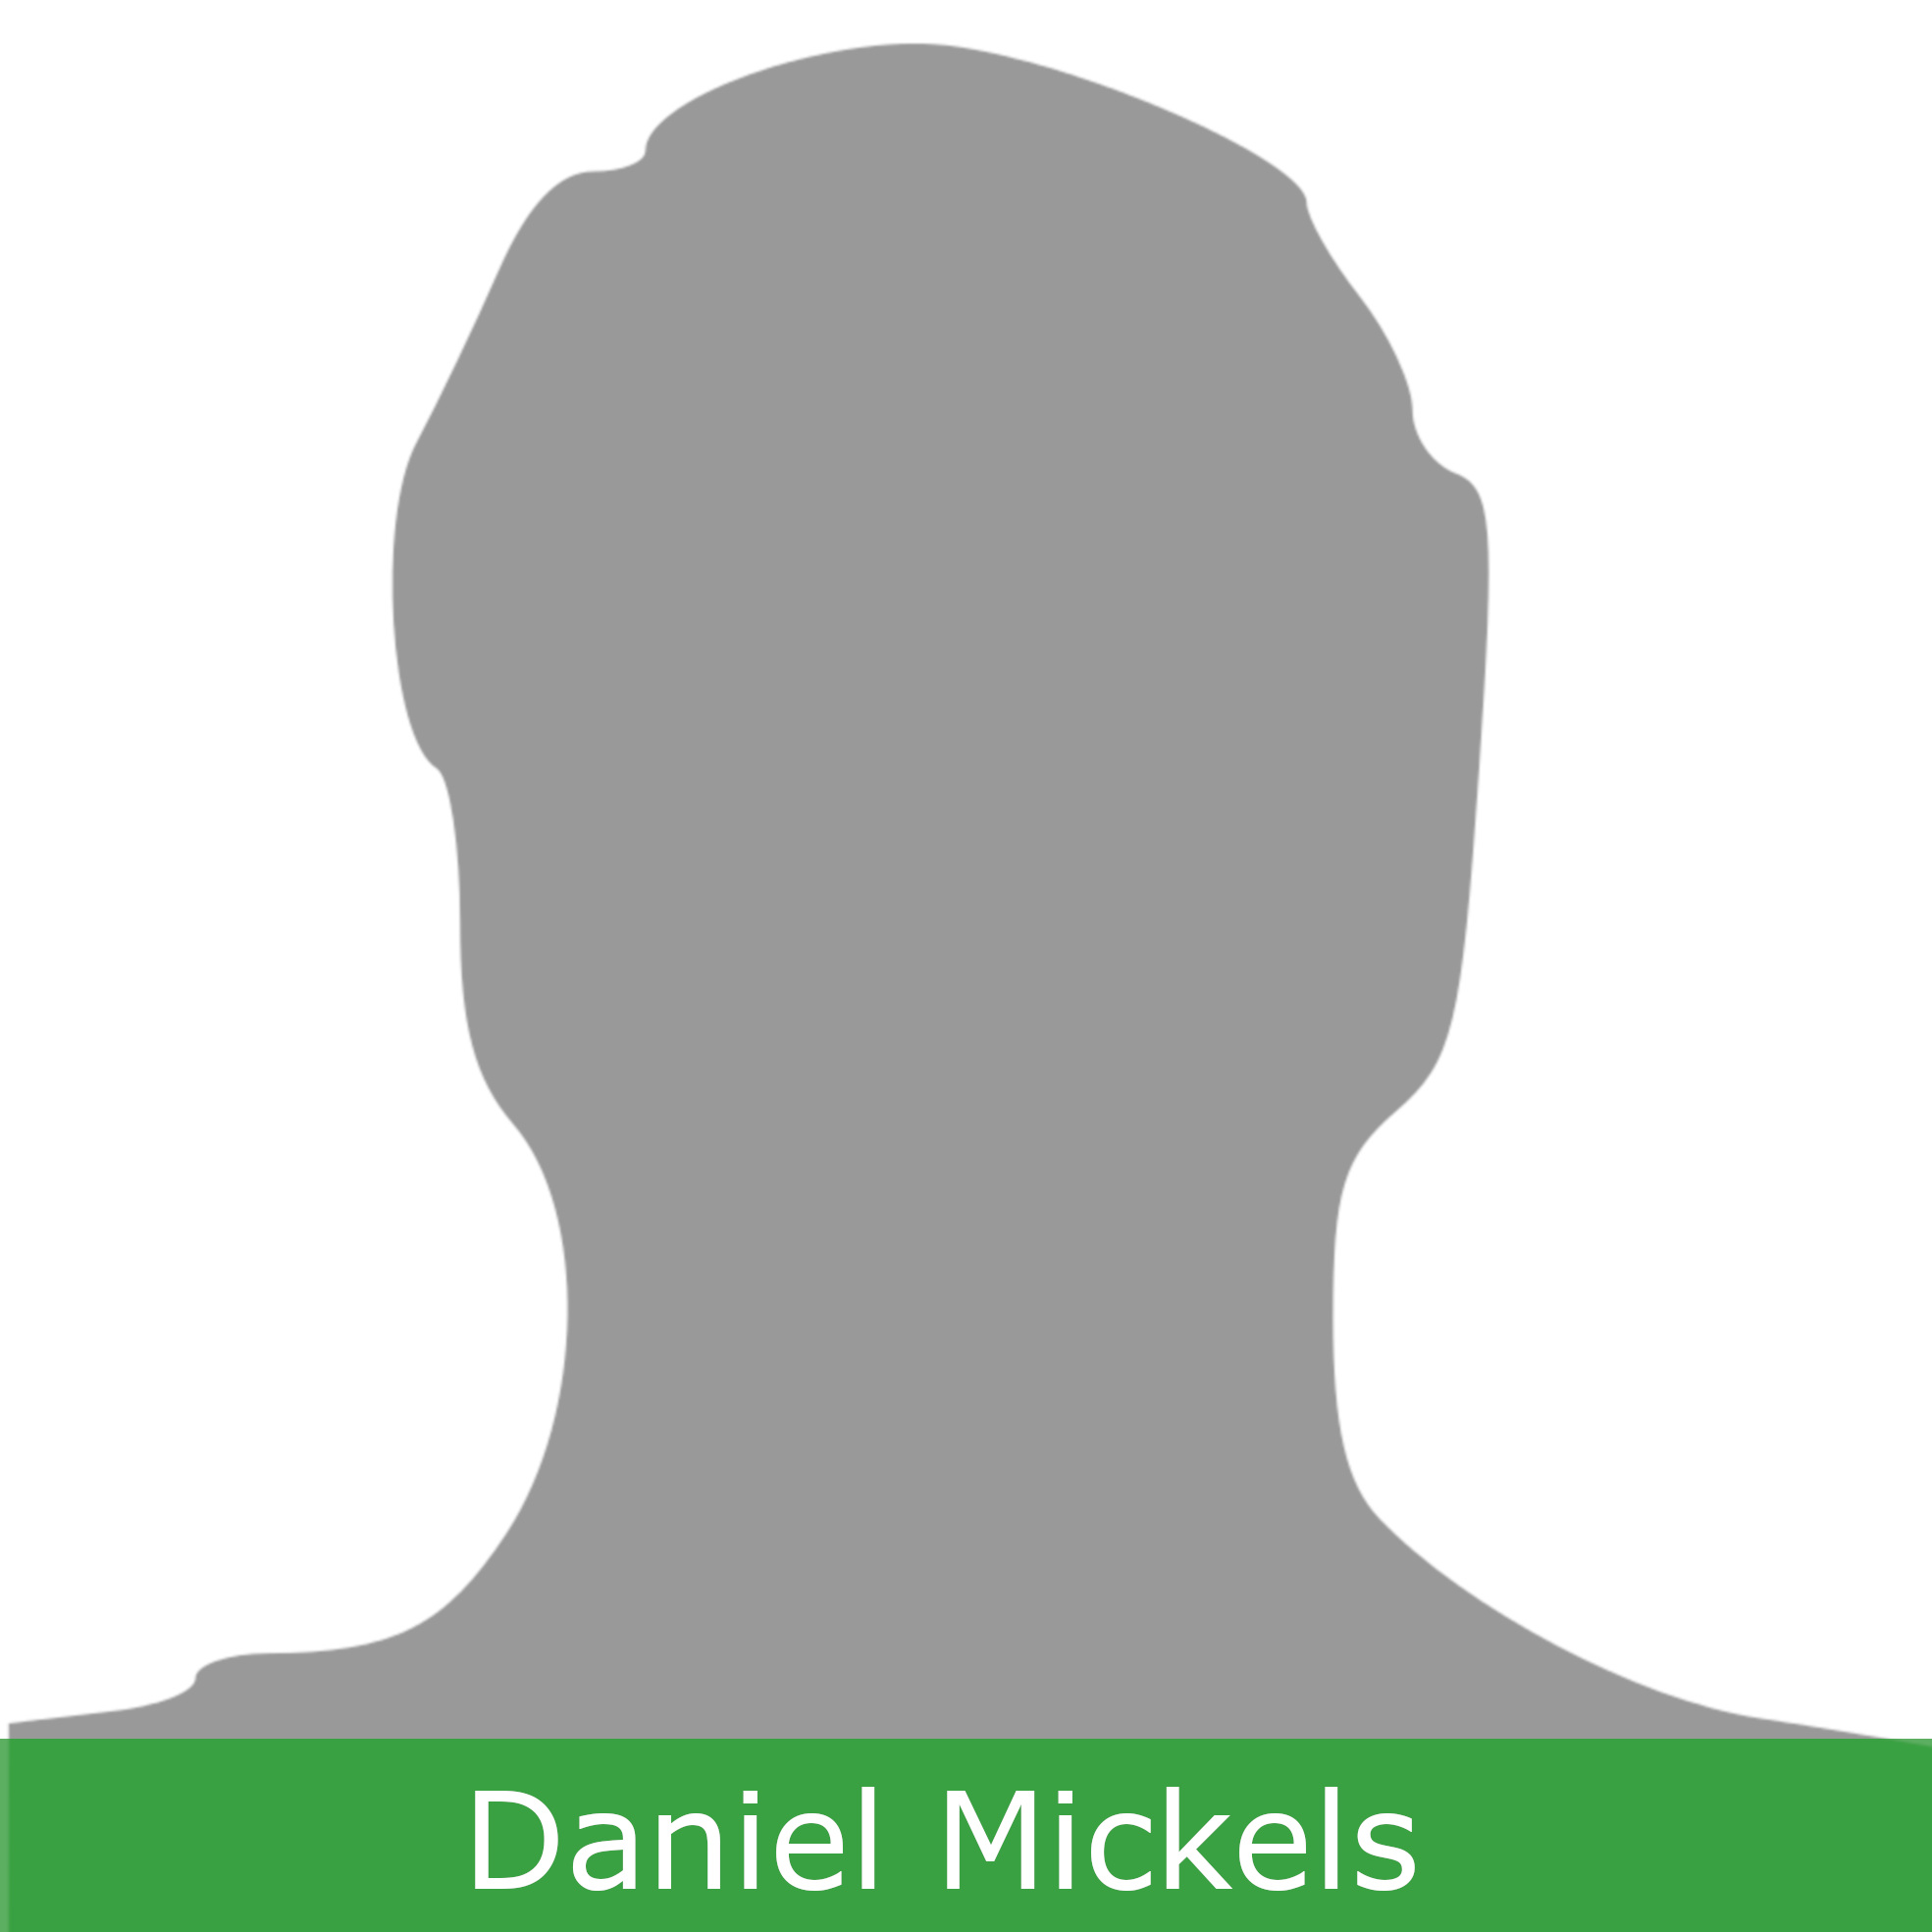 Daniel Mickels